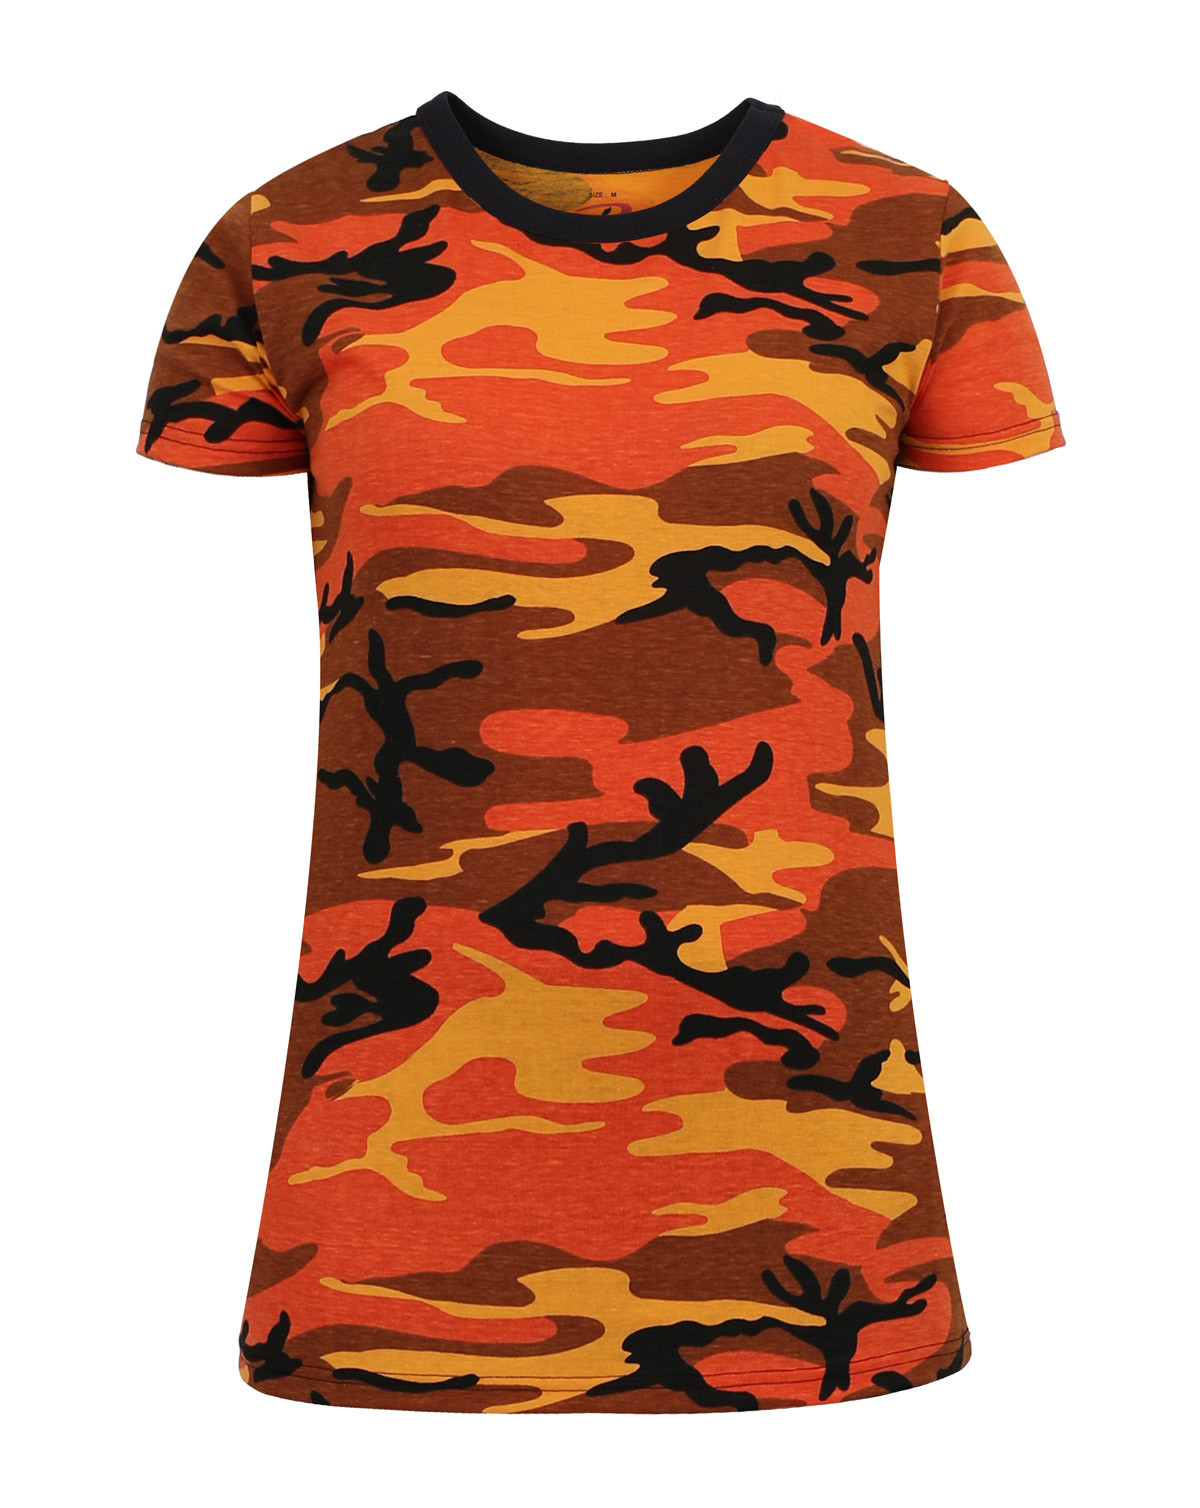 Rothco Camouflage T-Shirt (Orange Camo, XL)